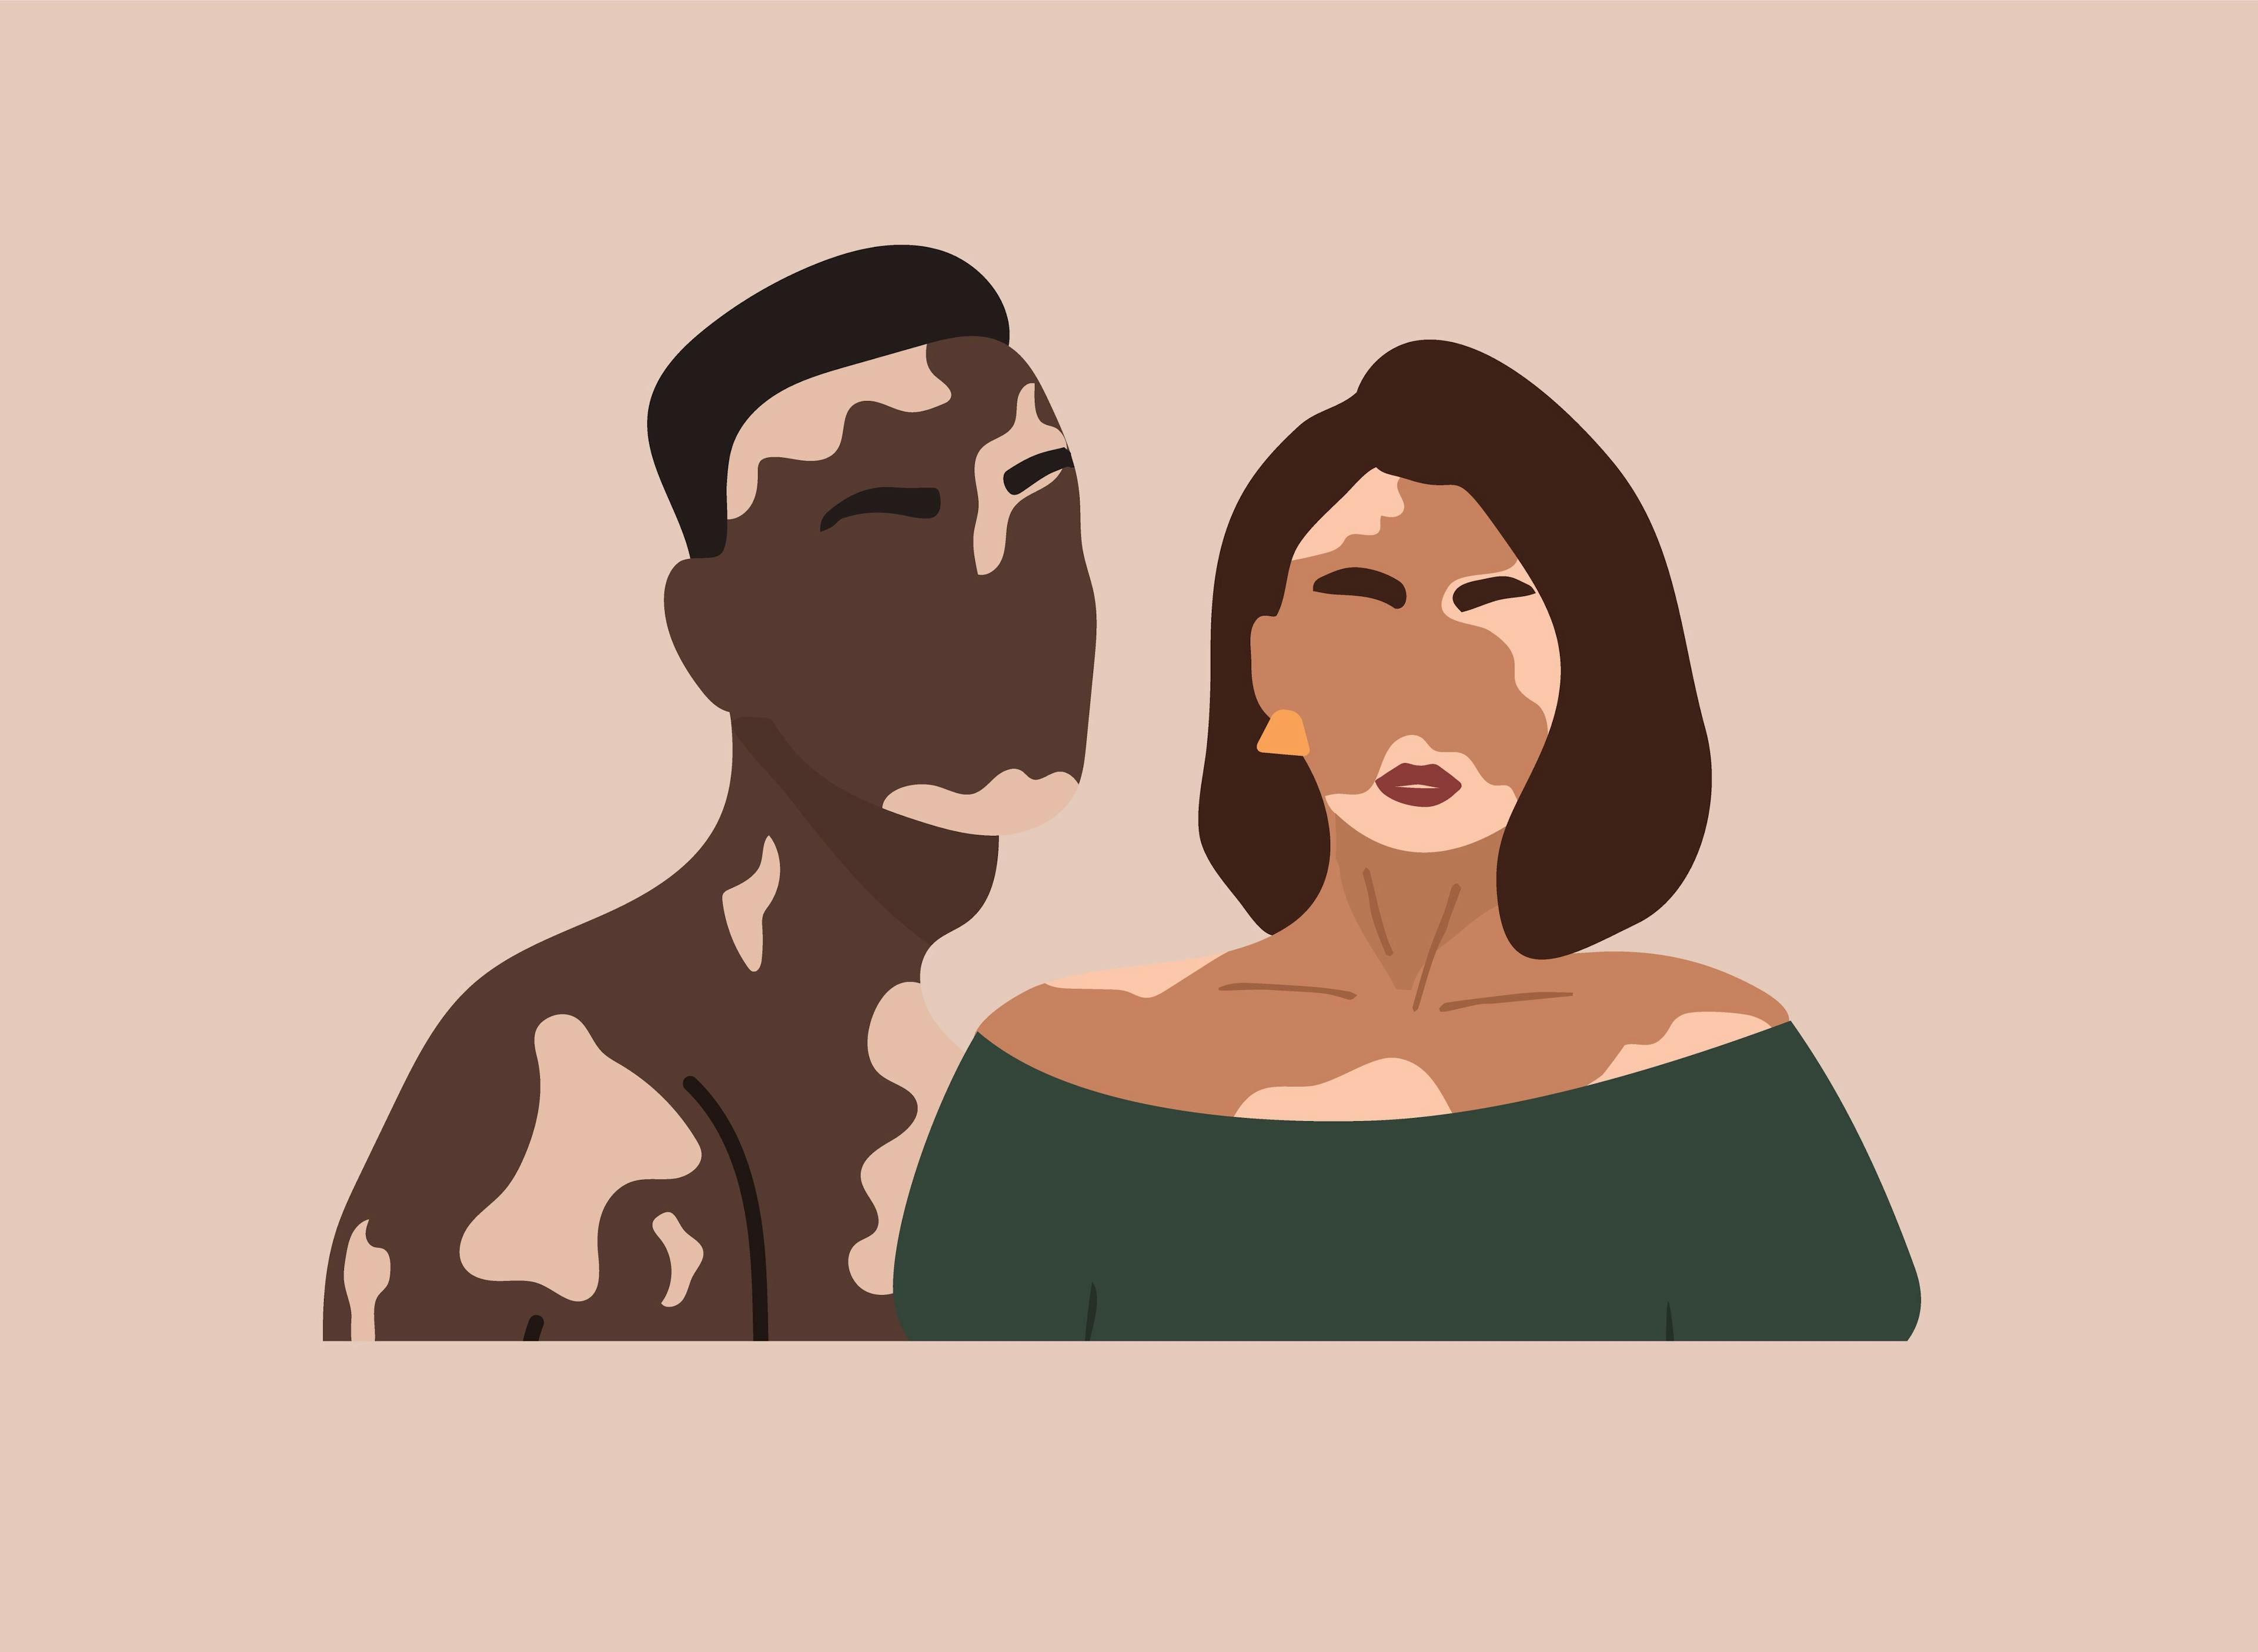 Gender Disparities in Vitiligo: Psychological Effects and QoL 